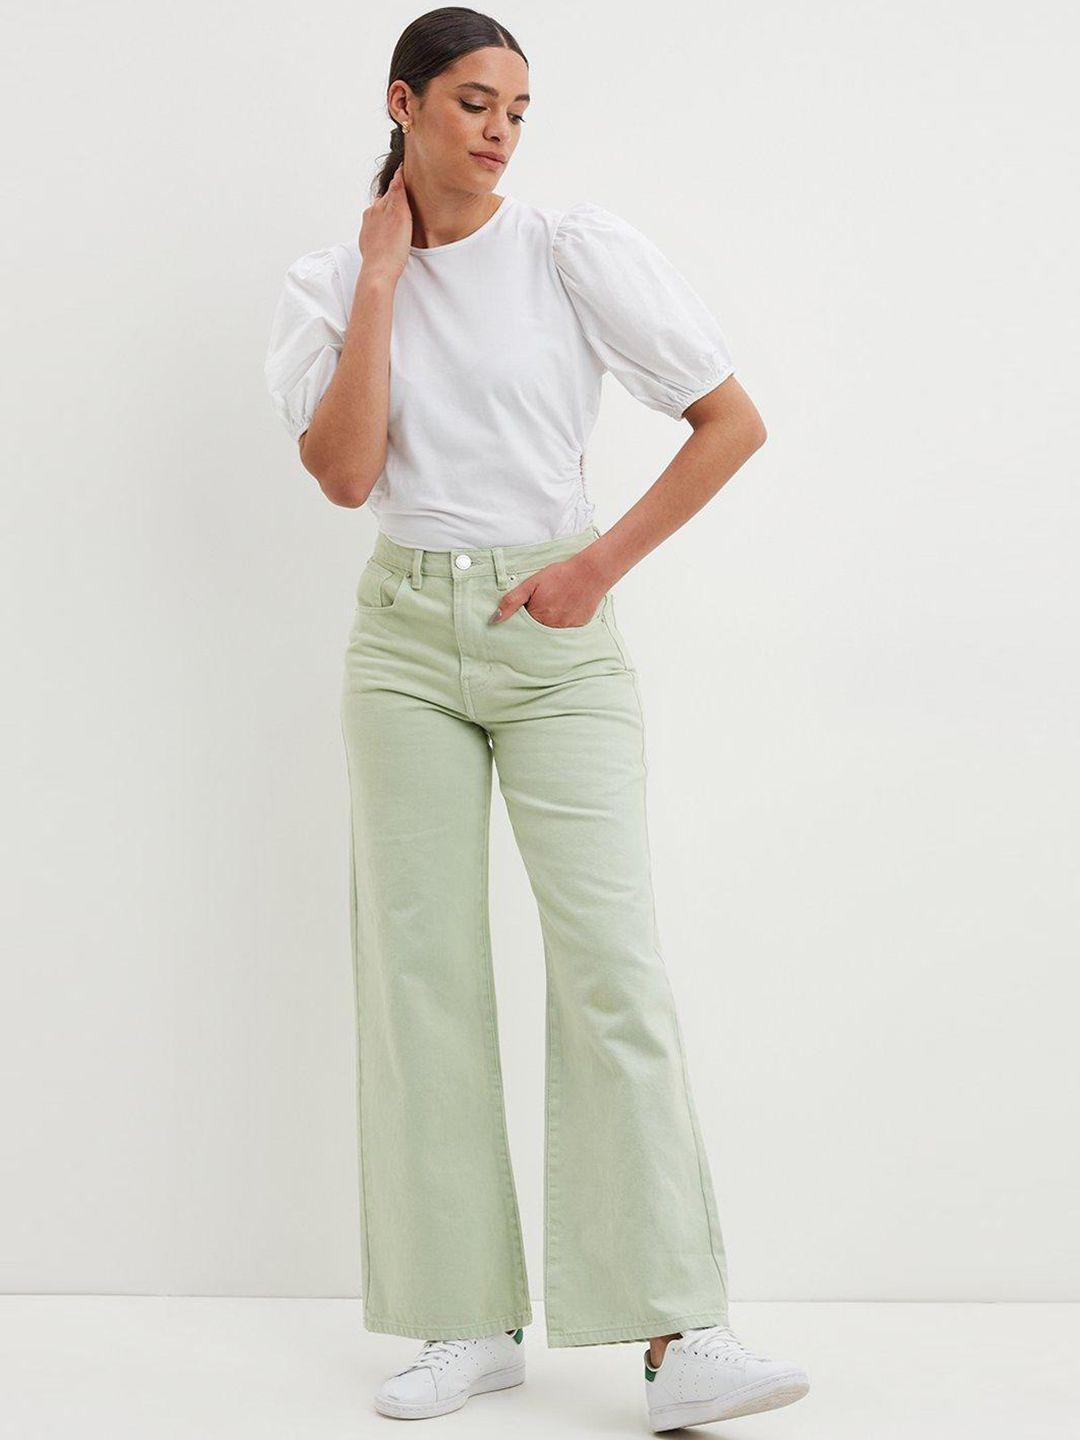 dorothy perkins women mint green cotton wide leg jeans